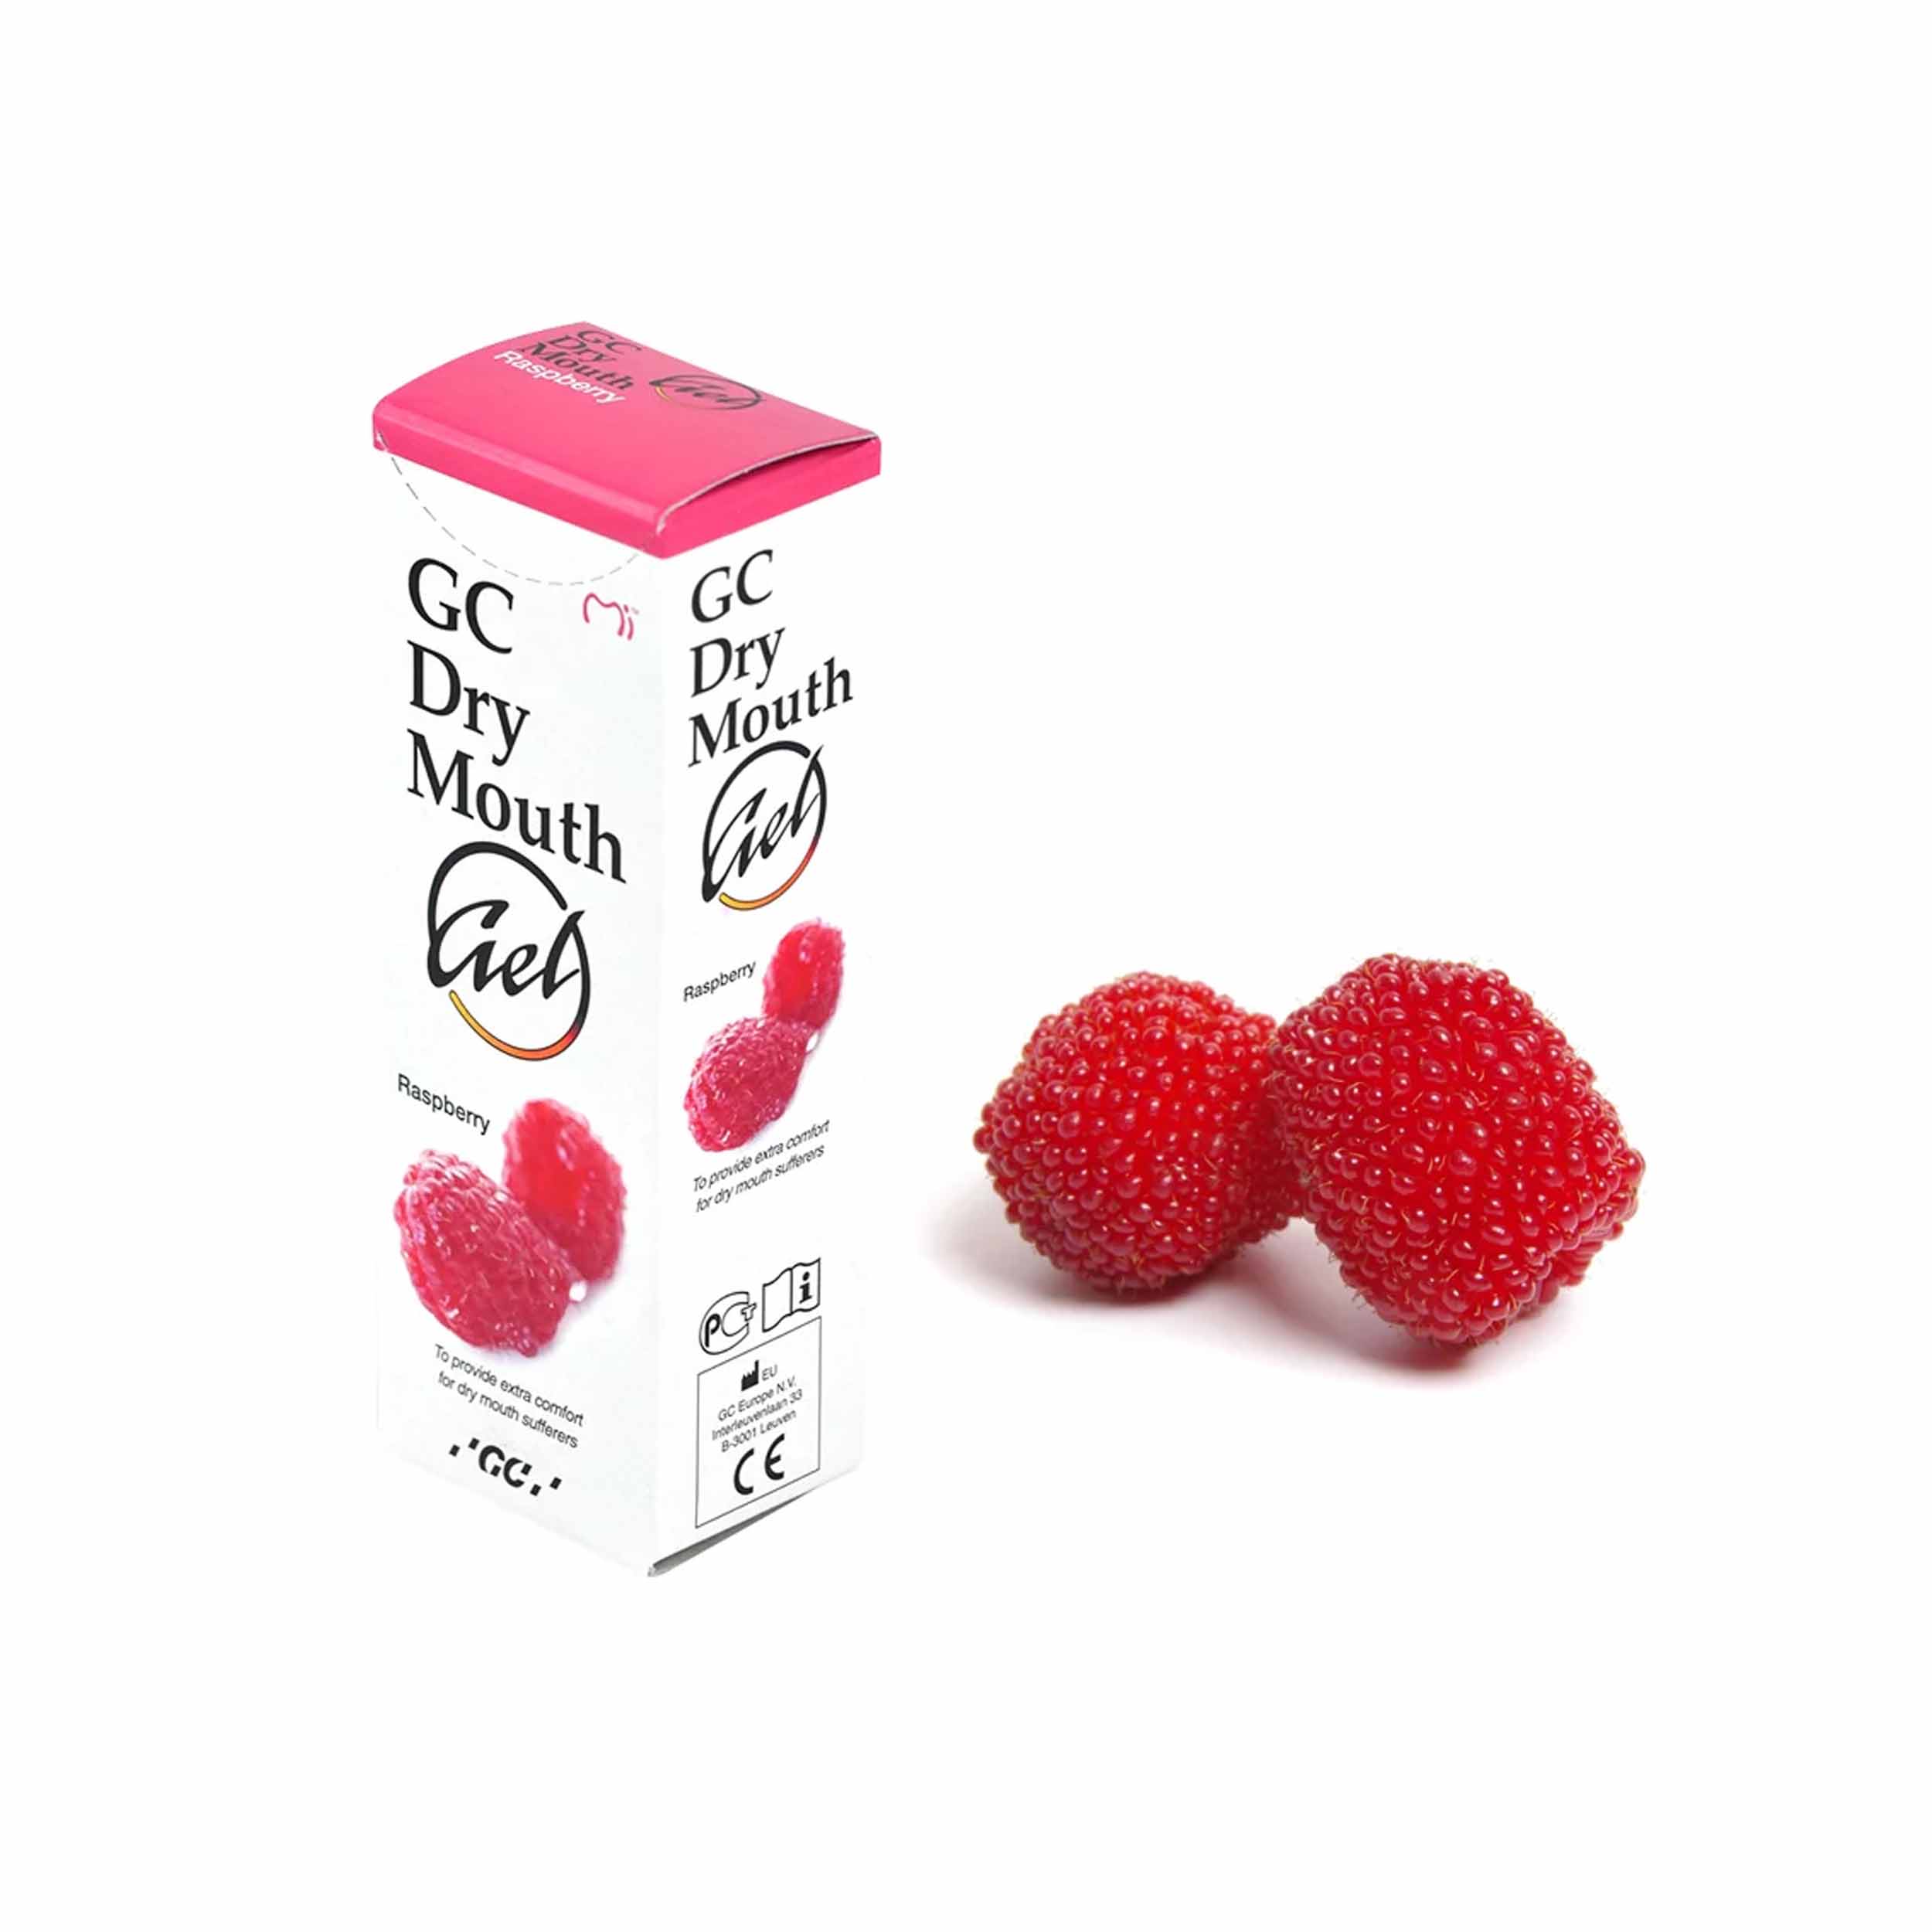 GC Dry Mouth Gel Raspberry 40gm